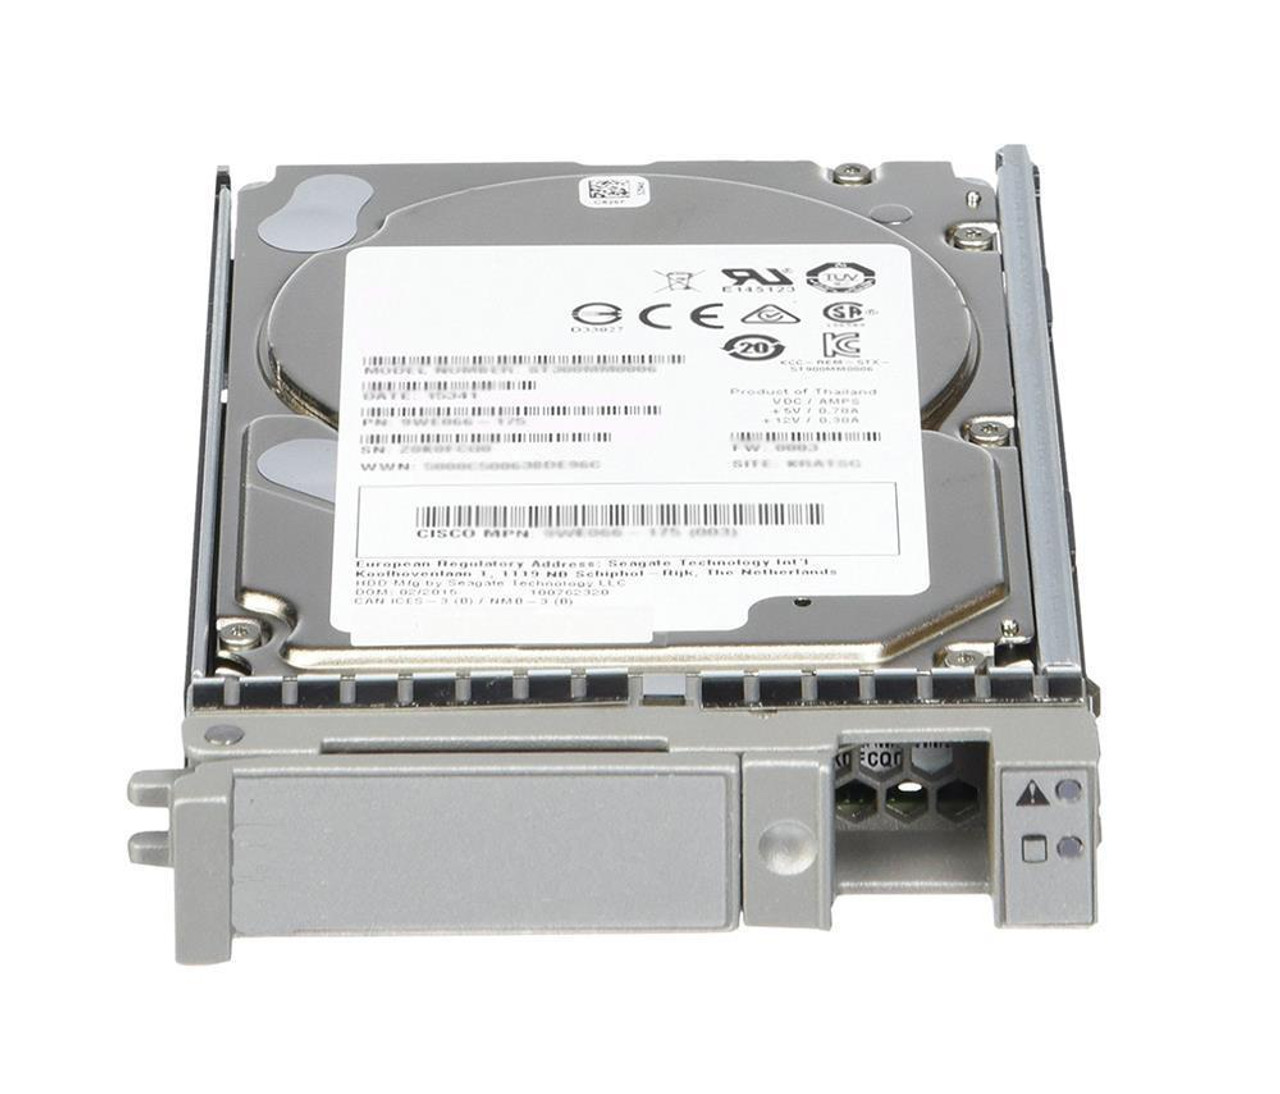 UCS-S3260-28HD4 Cisco 4TB 7200RPM SAS 12Gbps Nearline 3.5-inch Internal Hard Drive (28-Pack)